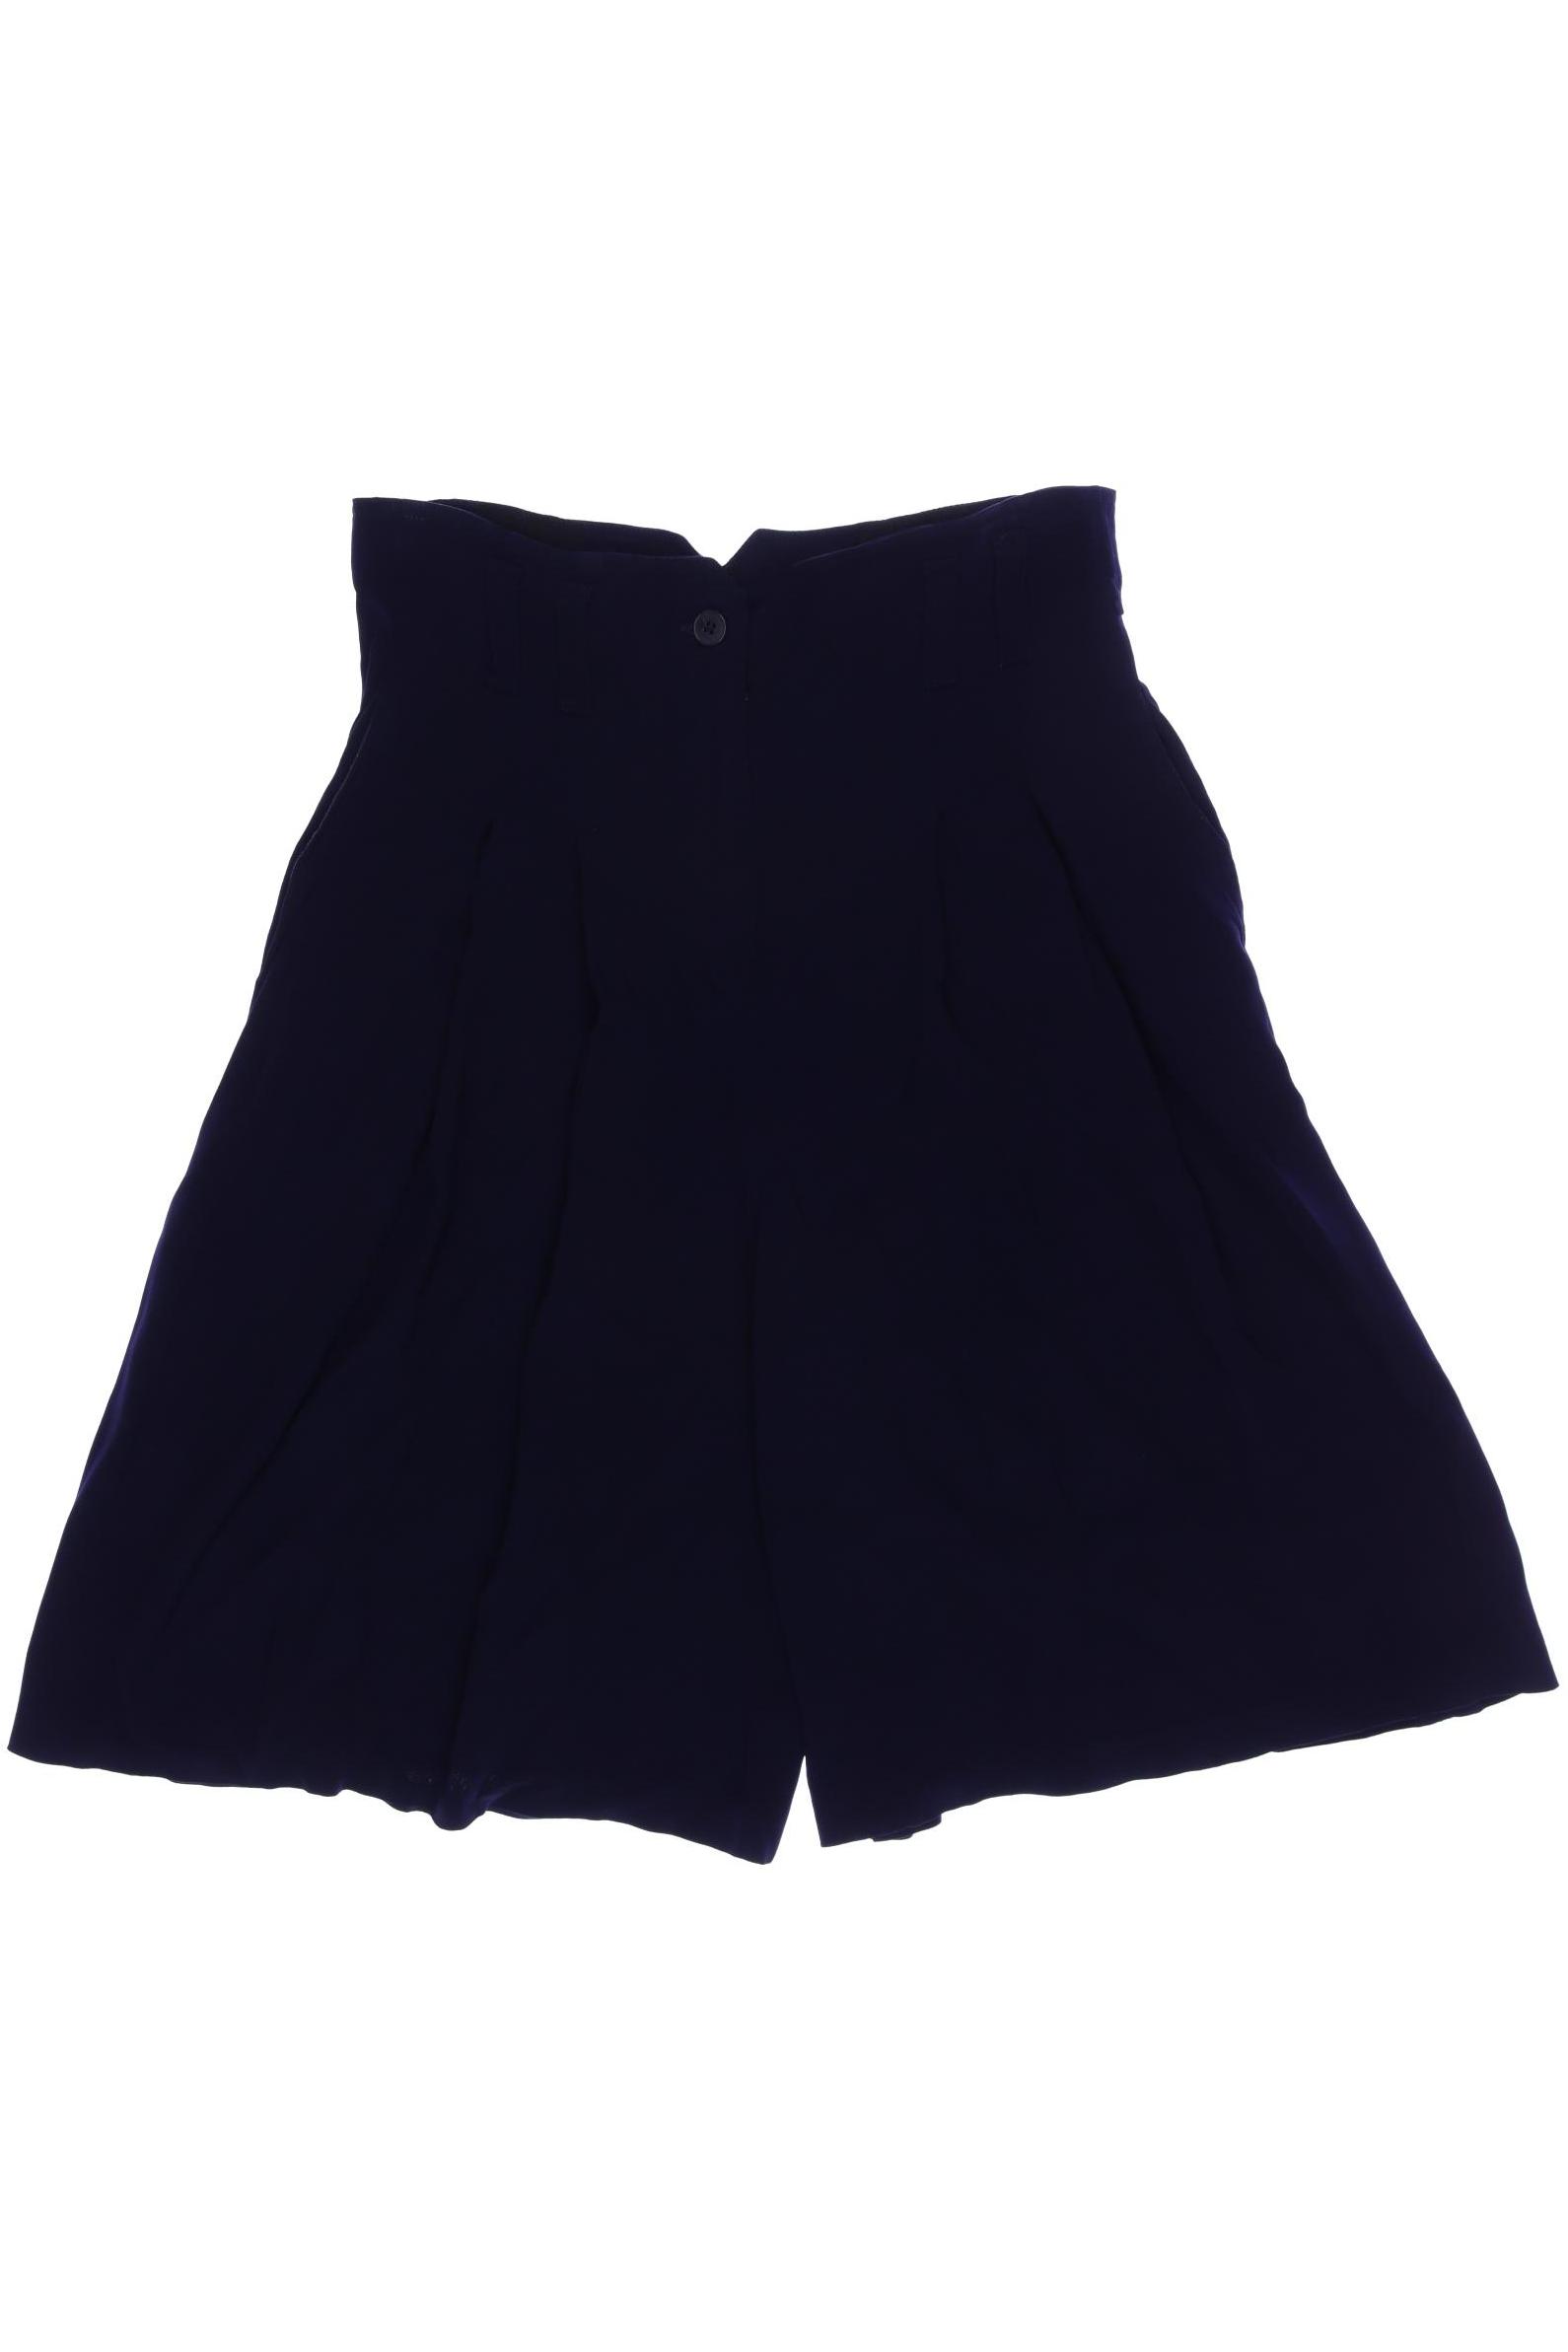 Zapa Damen Shorts, marineblau von Zapa